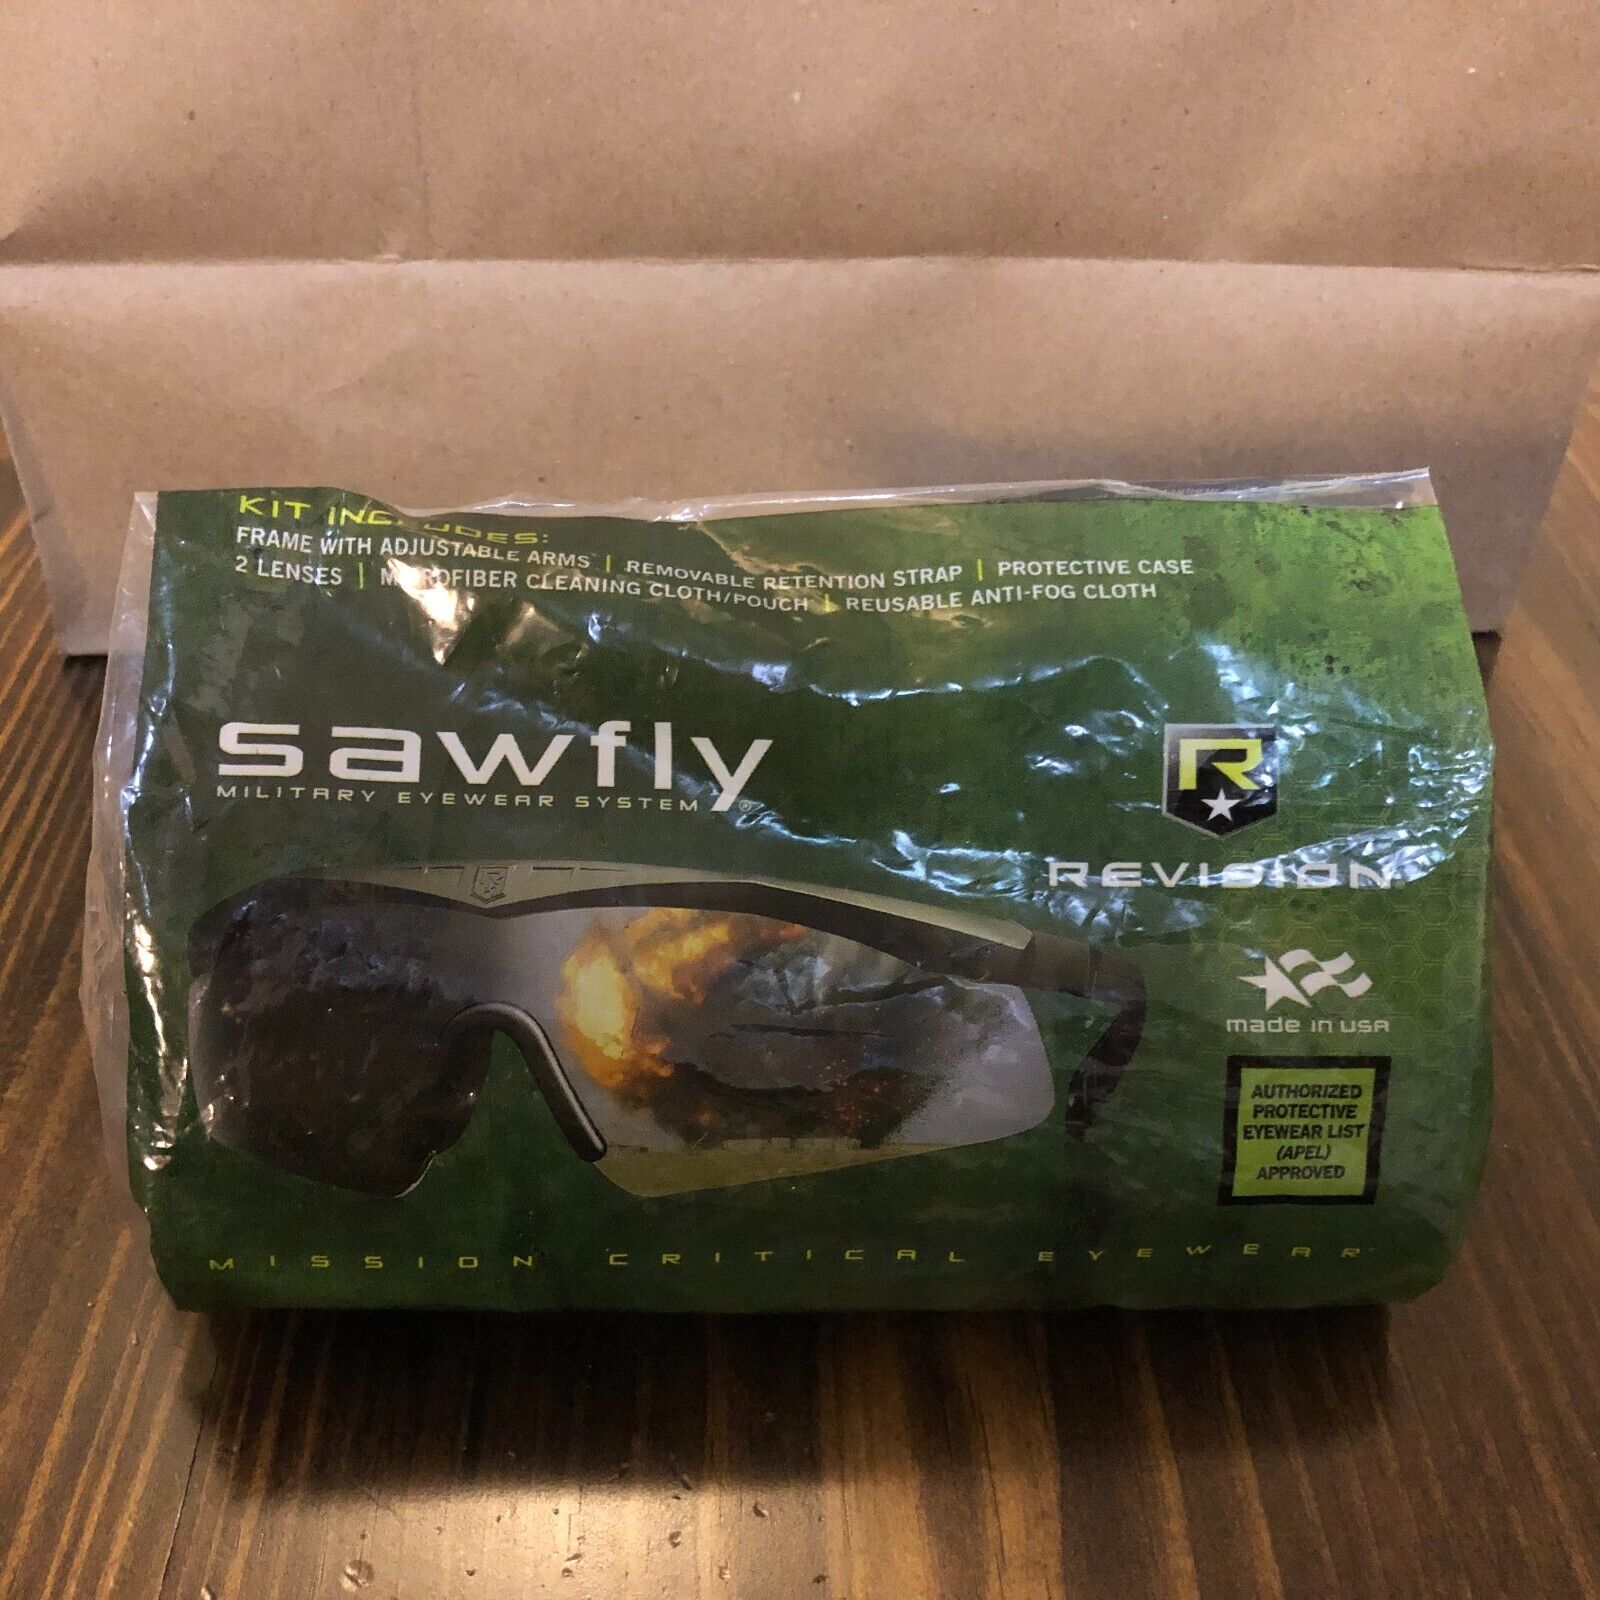 Revision Sawfly Military Ballistic Eyewear System Kit (BRAND NEW)